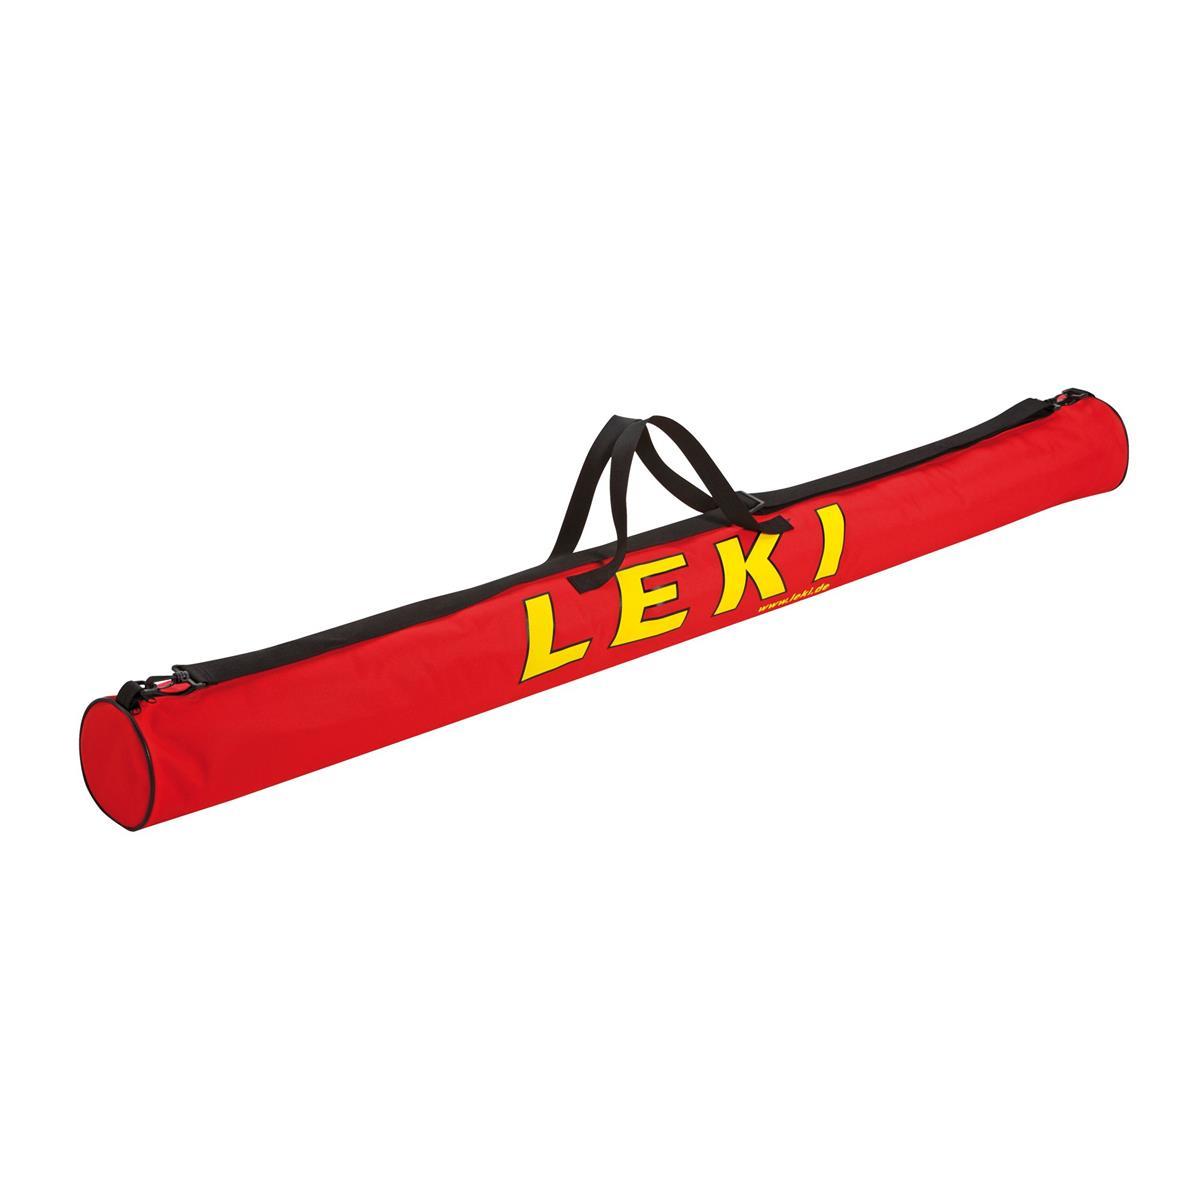 Leki Nordic Walking Pole Bag Small 2 Pairs